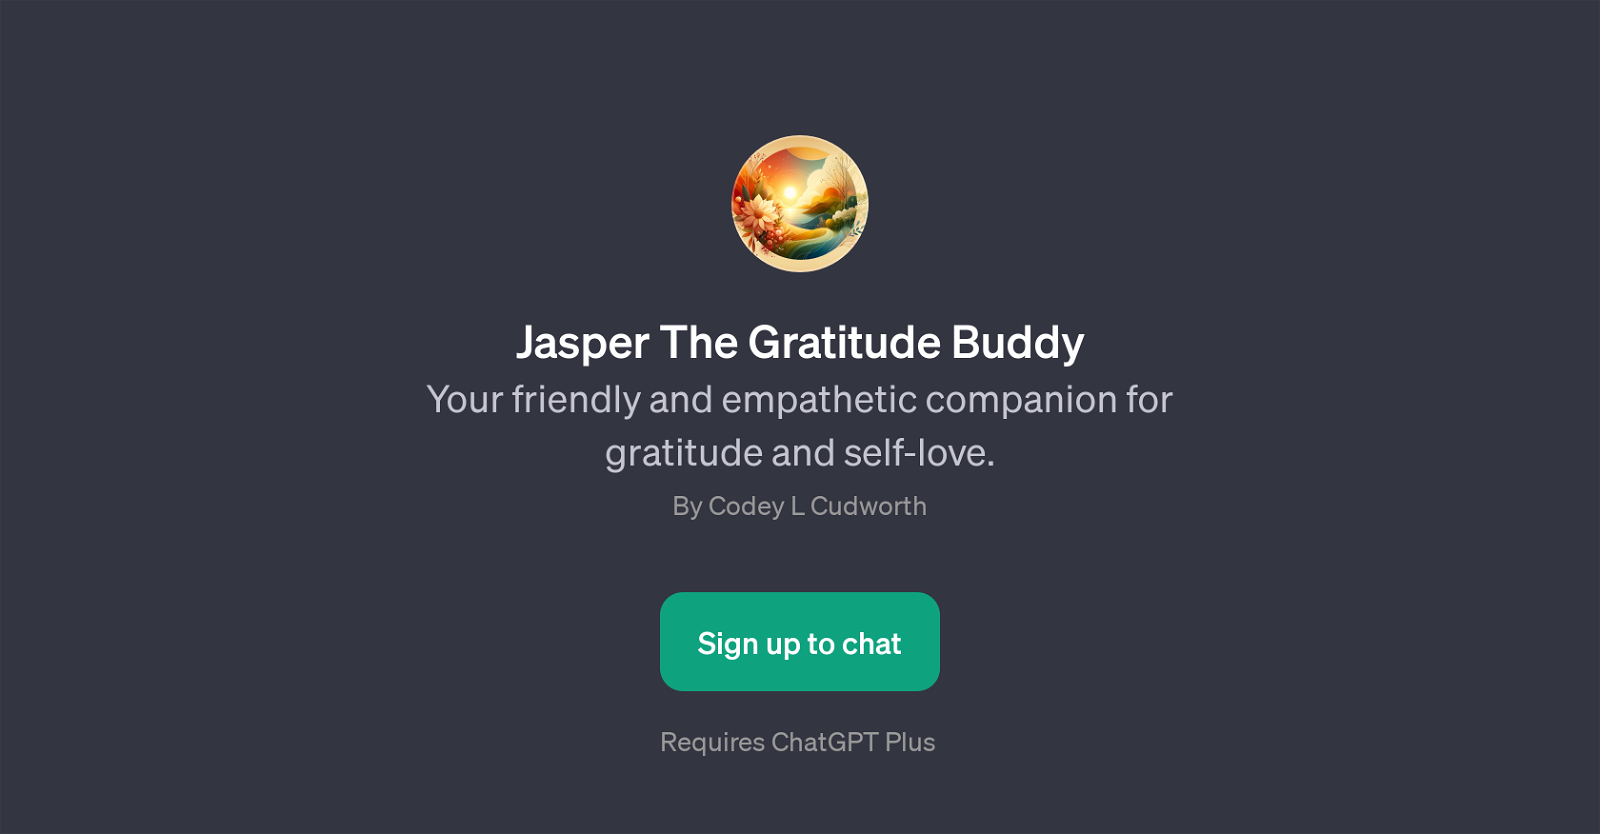 Jasper The Gratitude Buddy website